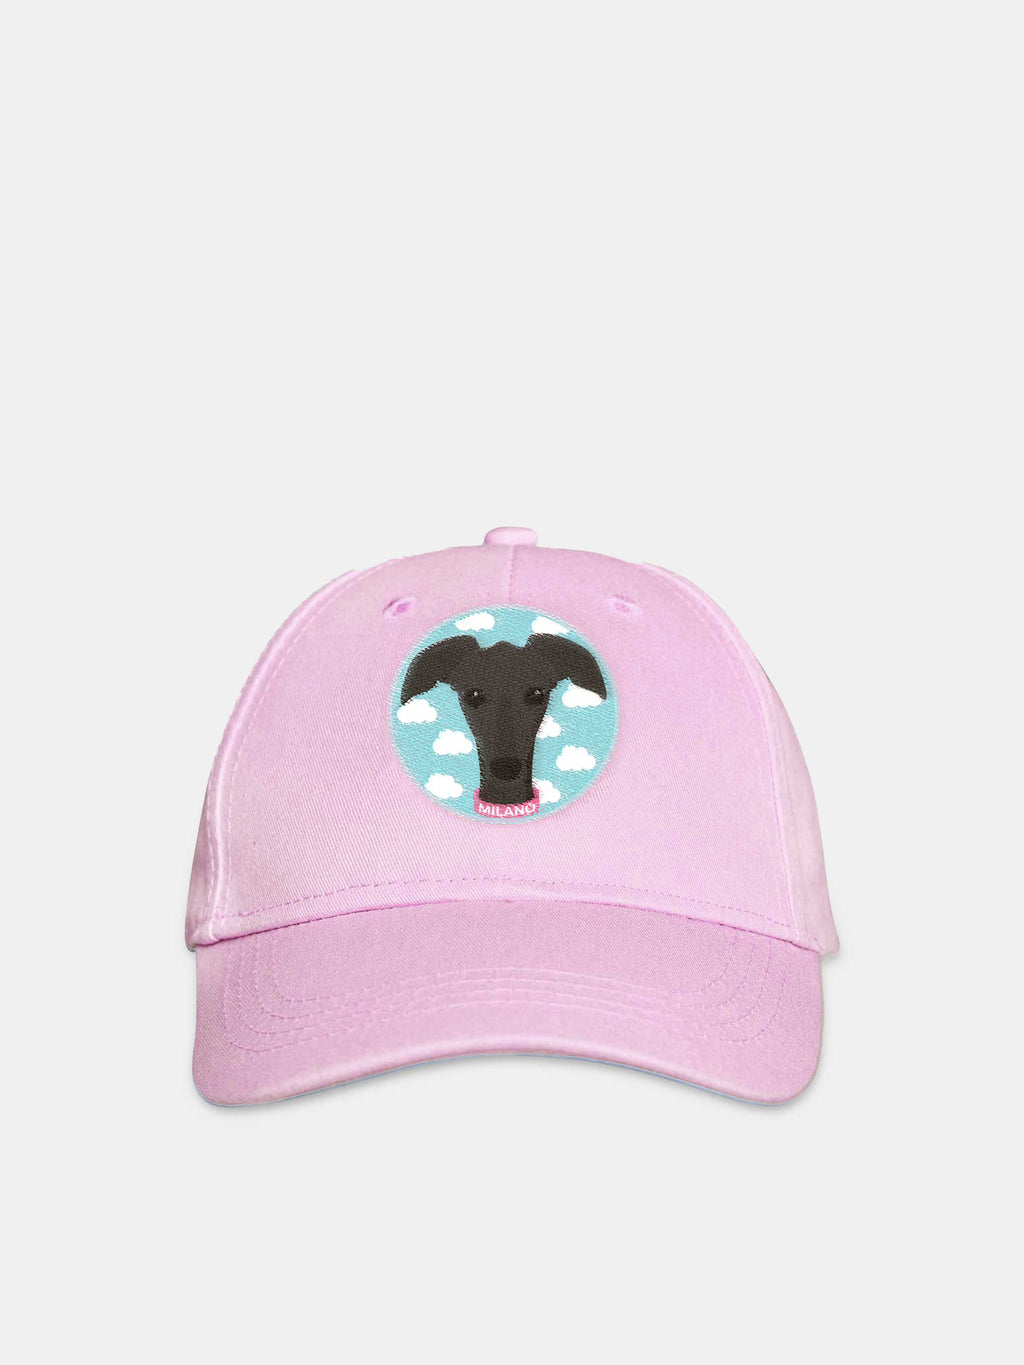 Pink cap for kids with Milan